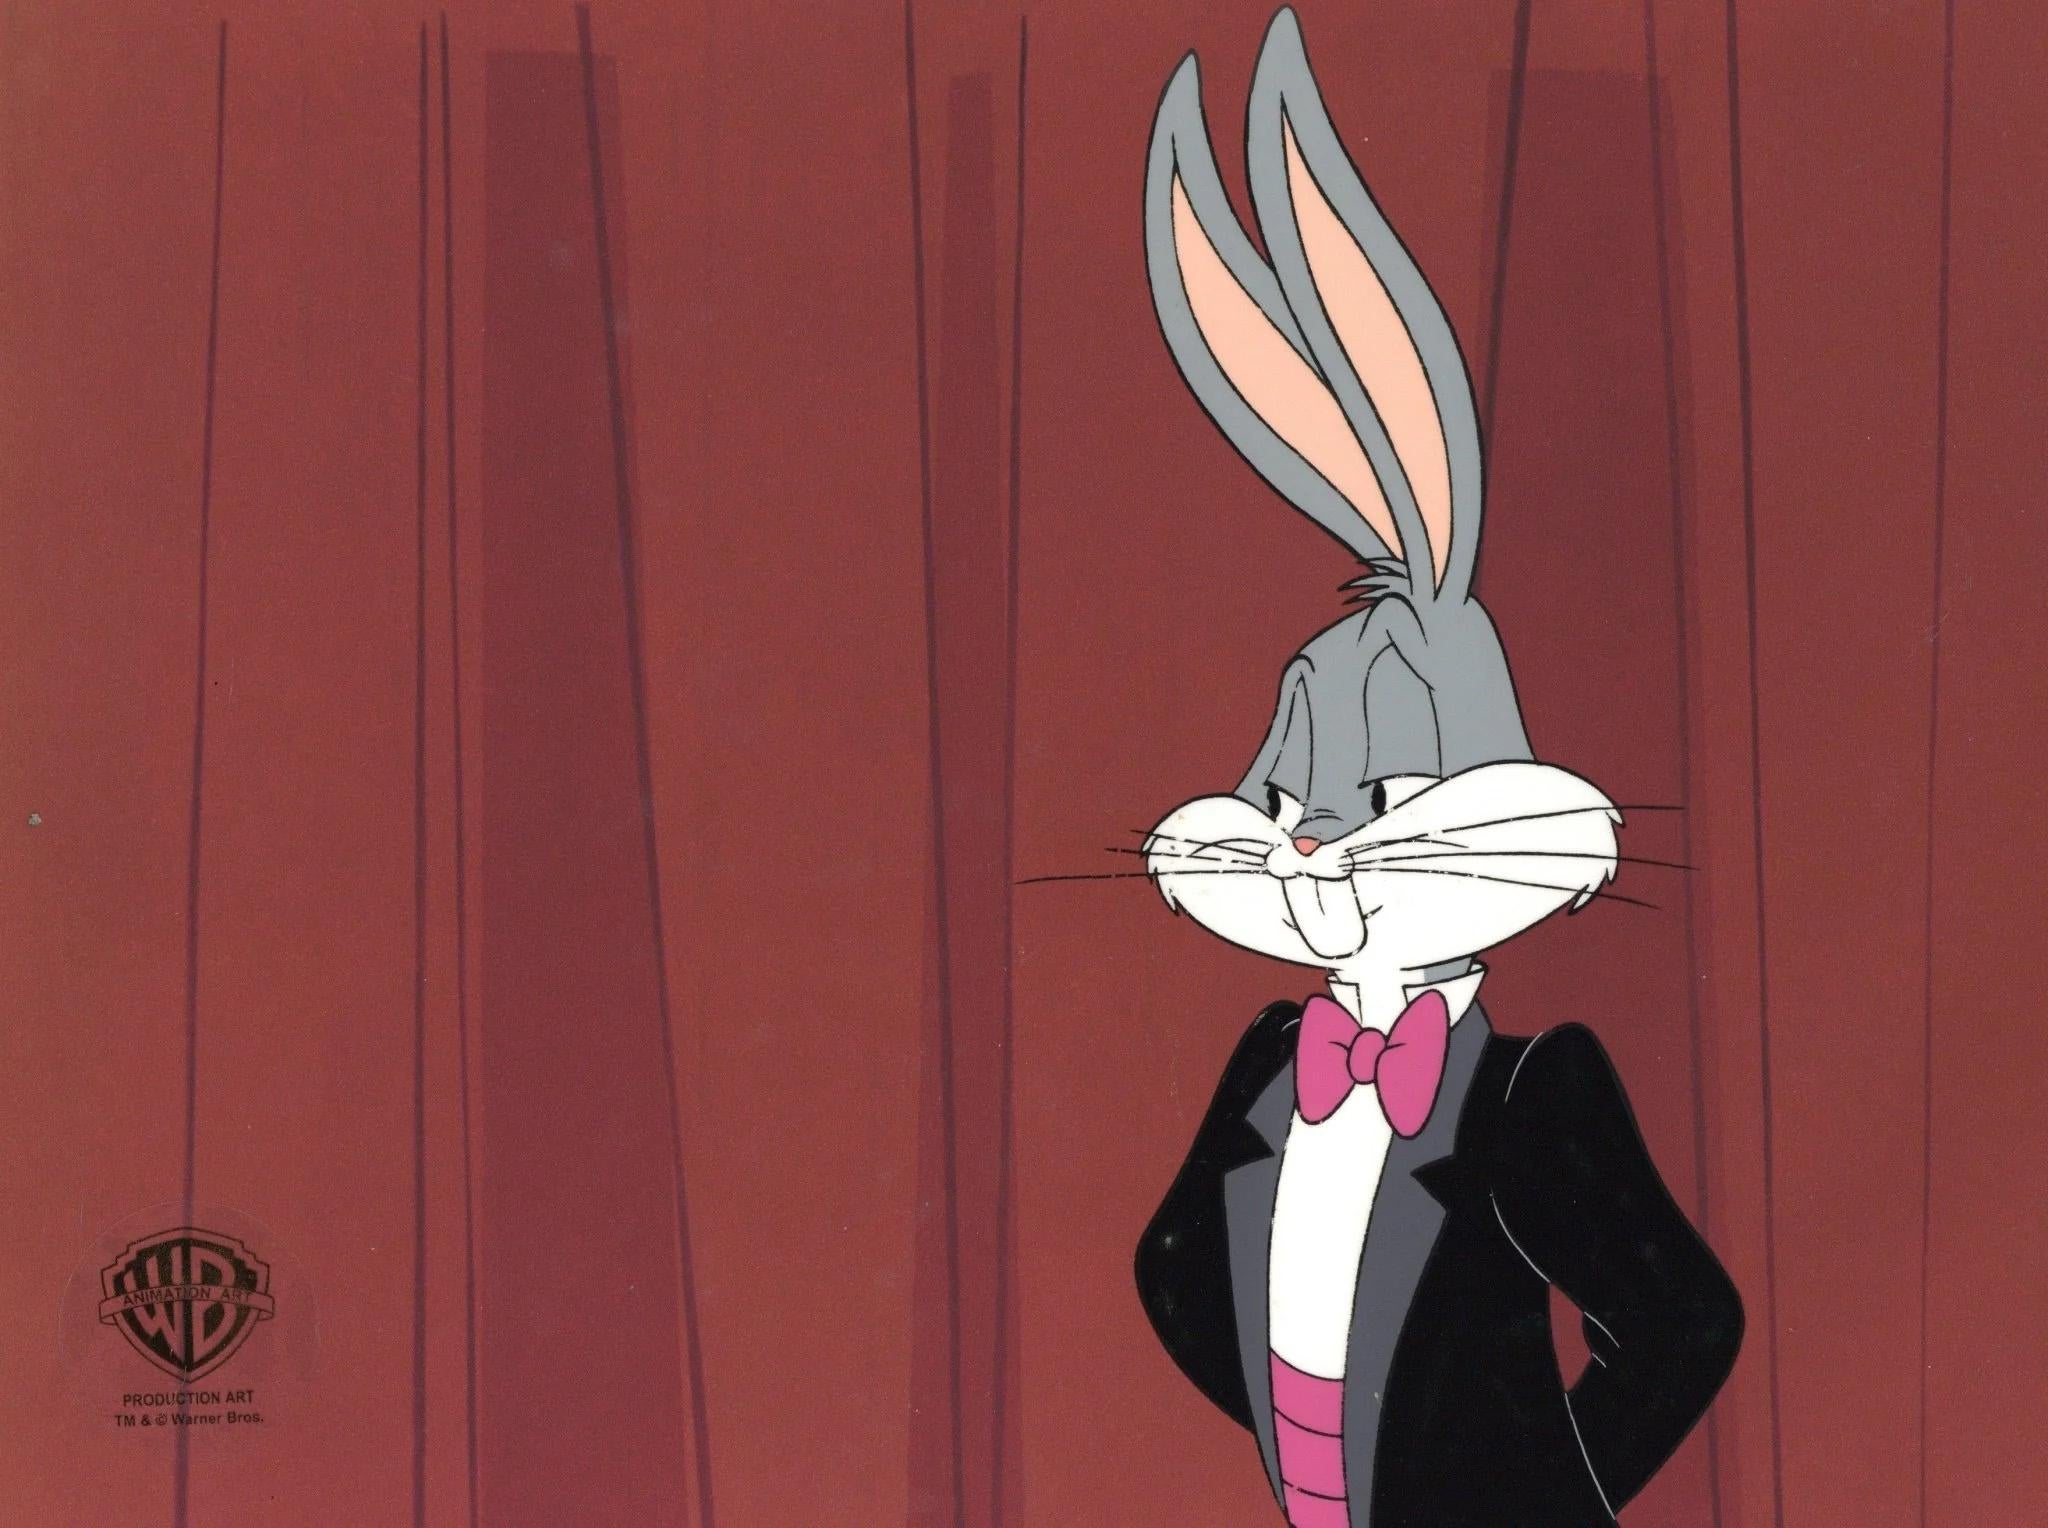 Looney Tunes Original Production Cel: Bugs Bunny - Art by Looney Tunes Studio Artists